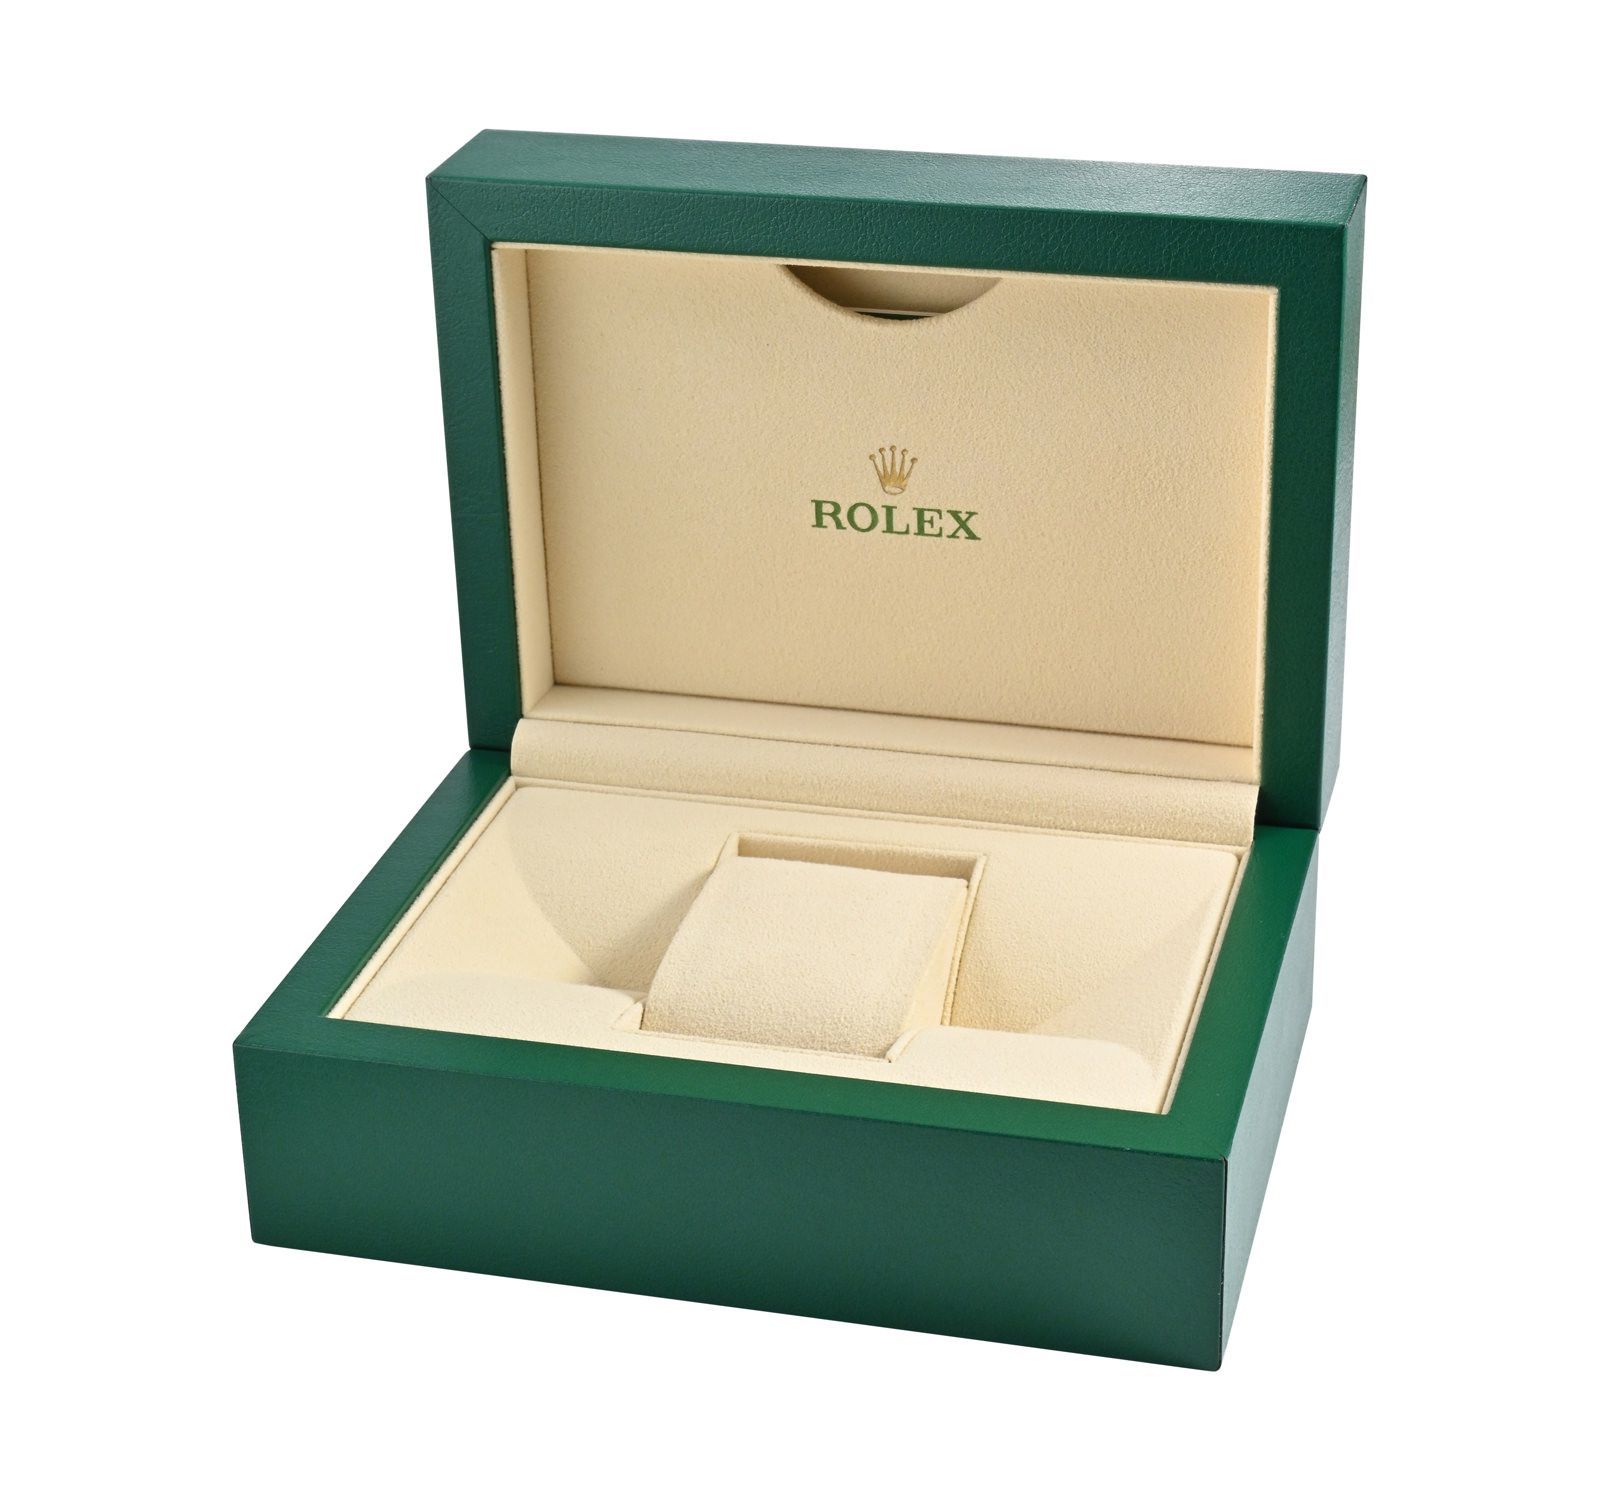 Rolex Datejust Features